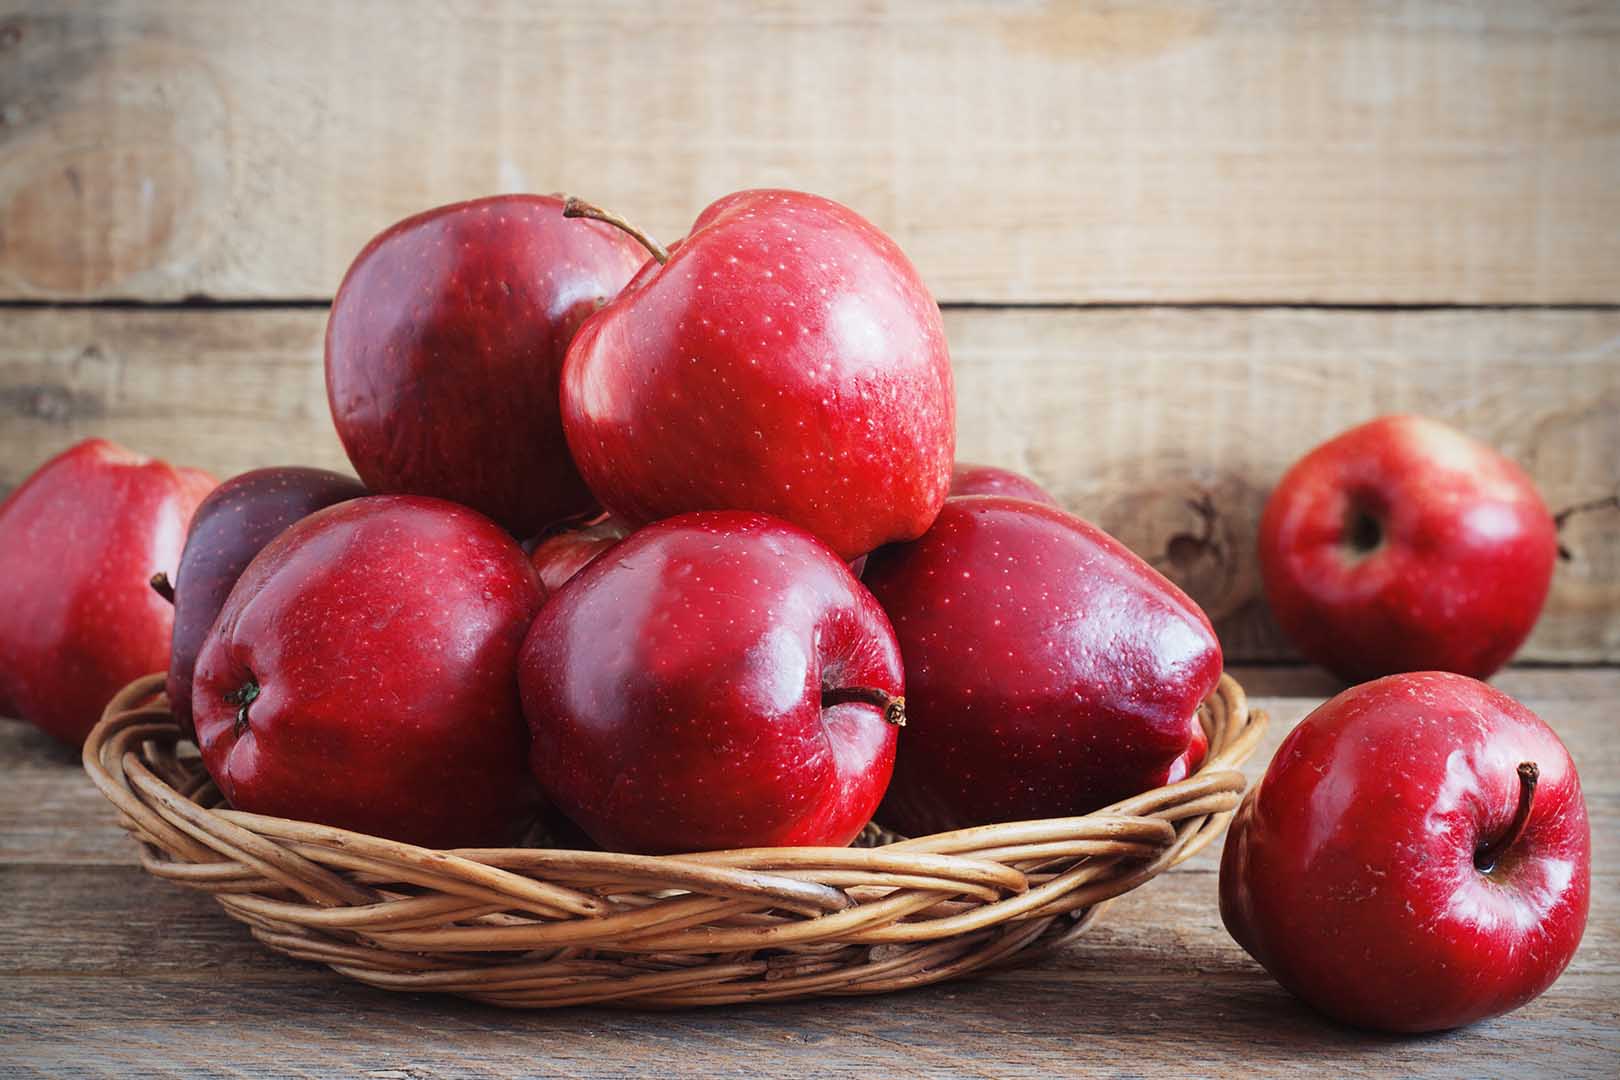 manfaat-buah-apel-antioksidan